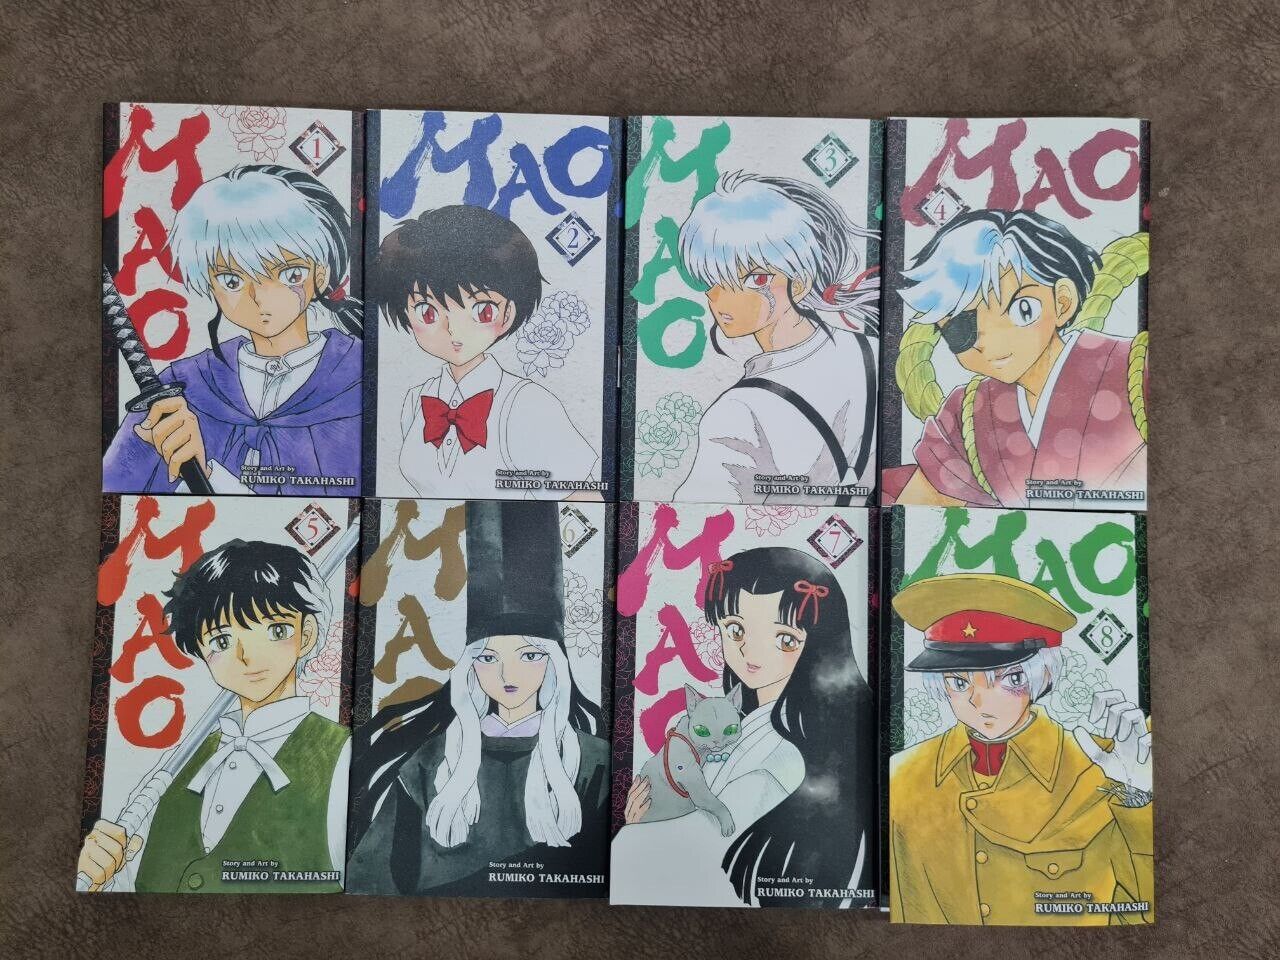 Manga : MAO volume 1 - 8 (English Version) + Fast Shipping